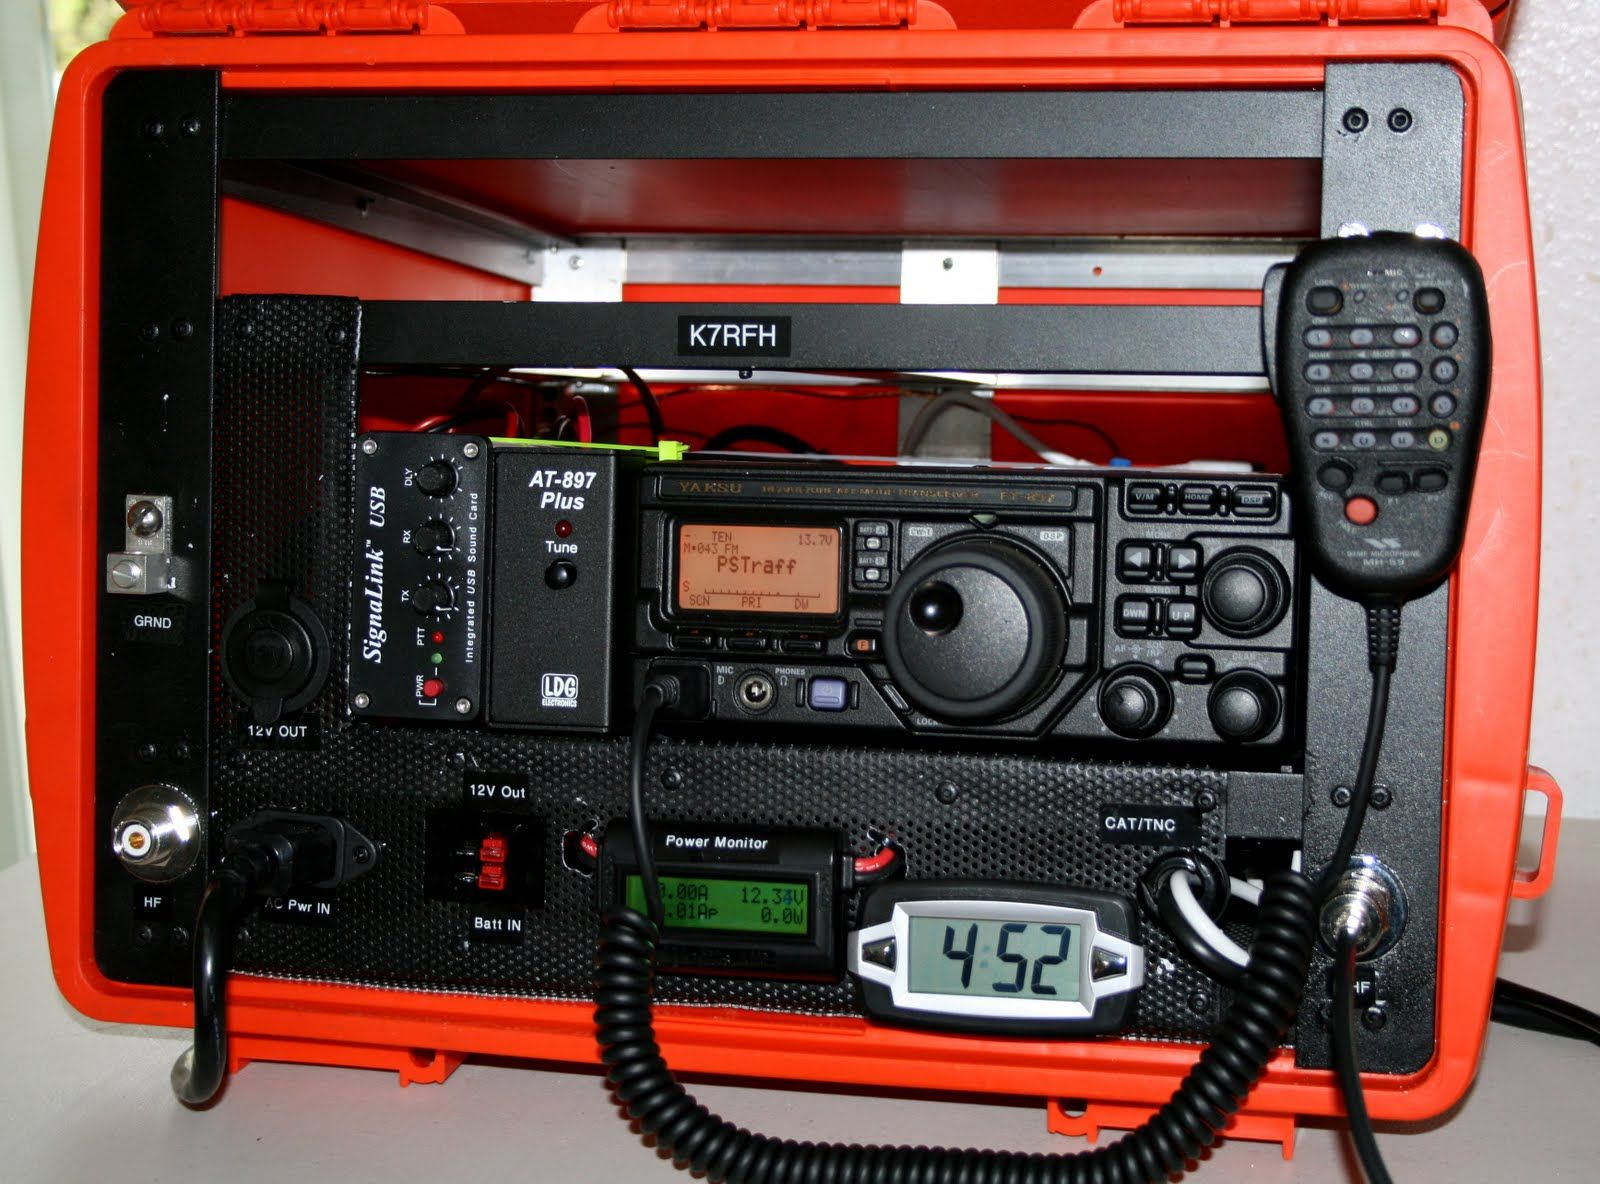 Comm Academy 2010 Portable Radio Contest K7rfh Radio In